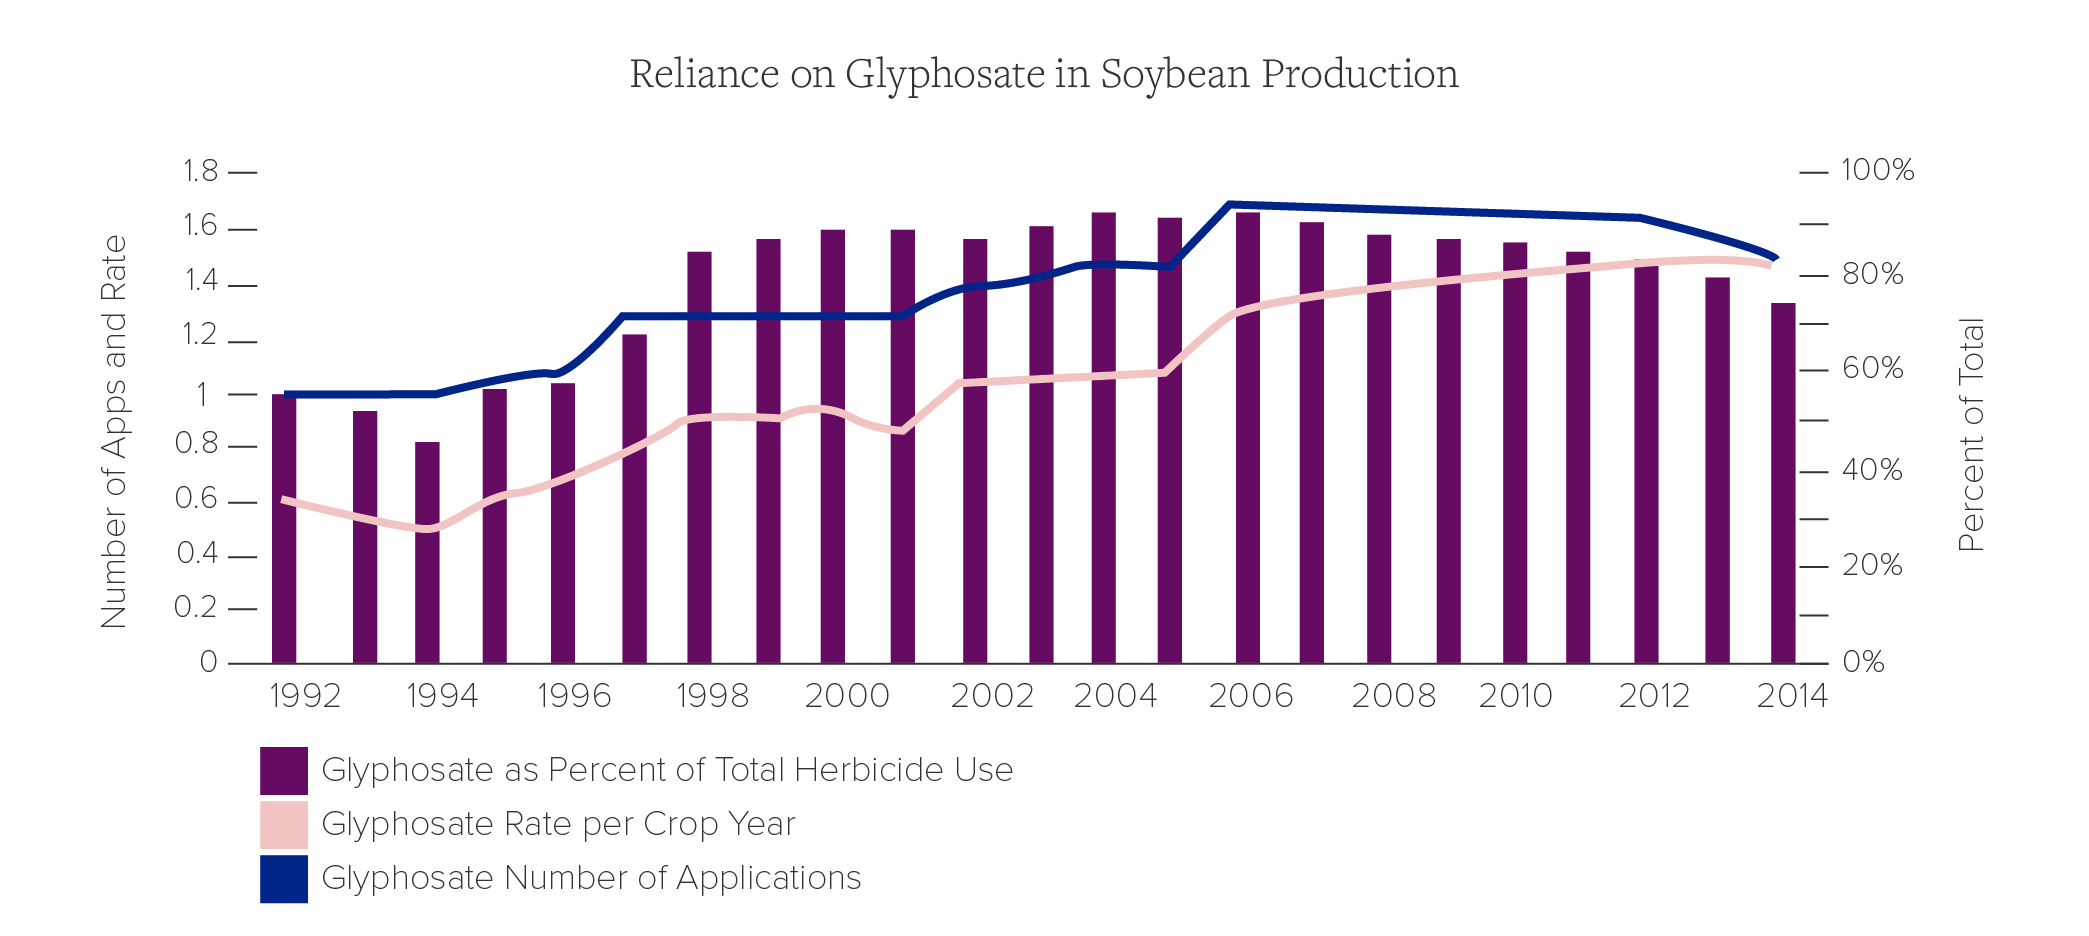 Reliance on Glyphosate in Soybean Production